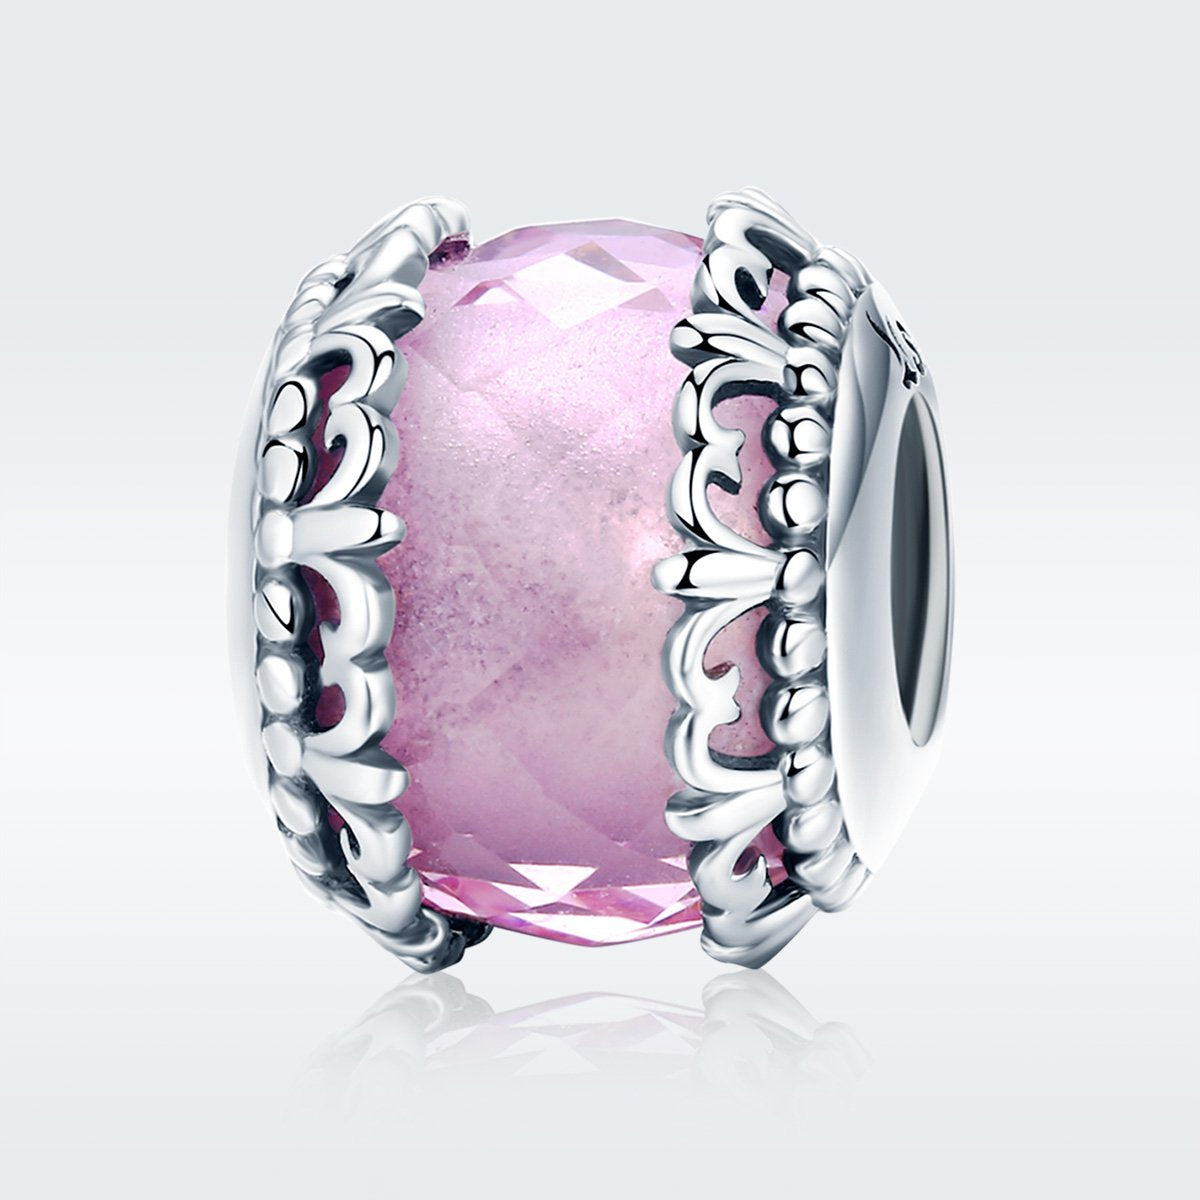 Sterling 925 silver charm the pink origin fits Pandora charm and European charm bracelet Xaxe.com